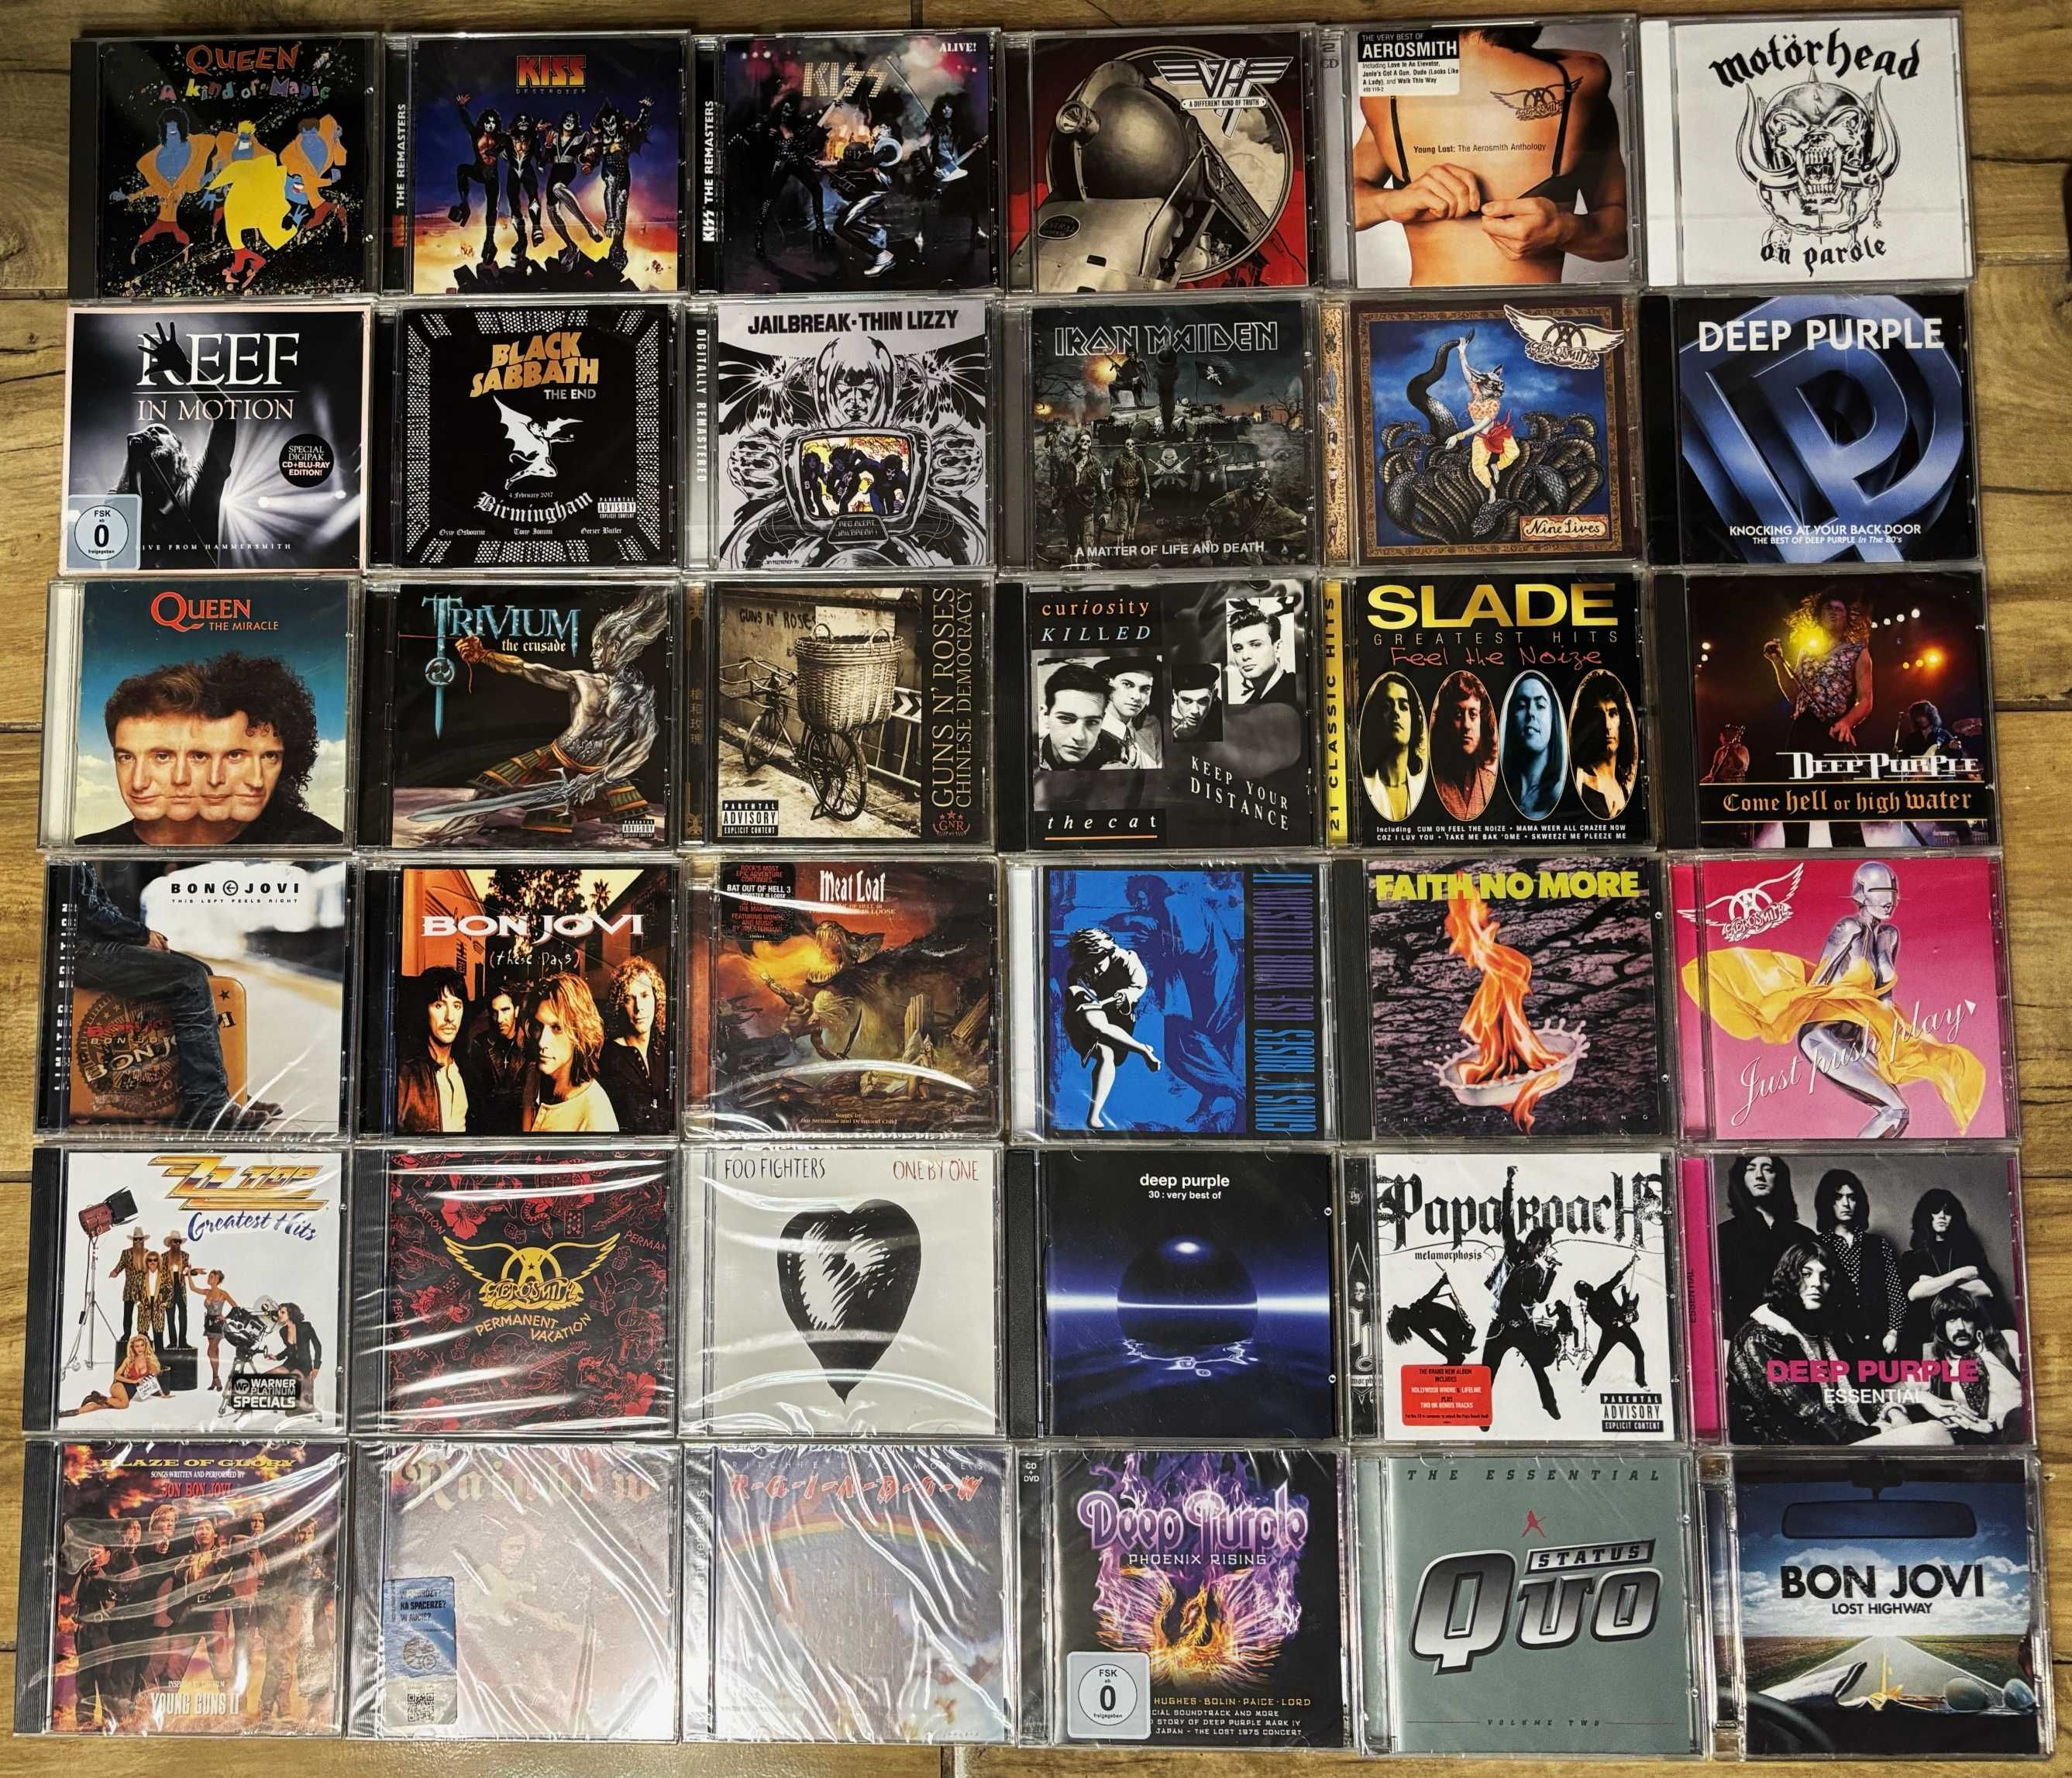 Polecam Album CD Legenda Rock-a ZZ Top Greatest Hits CD